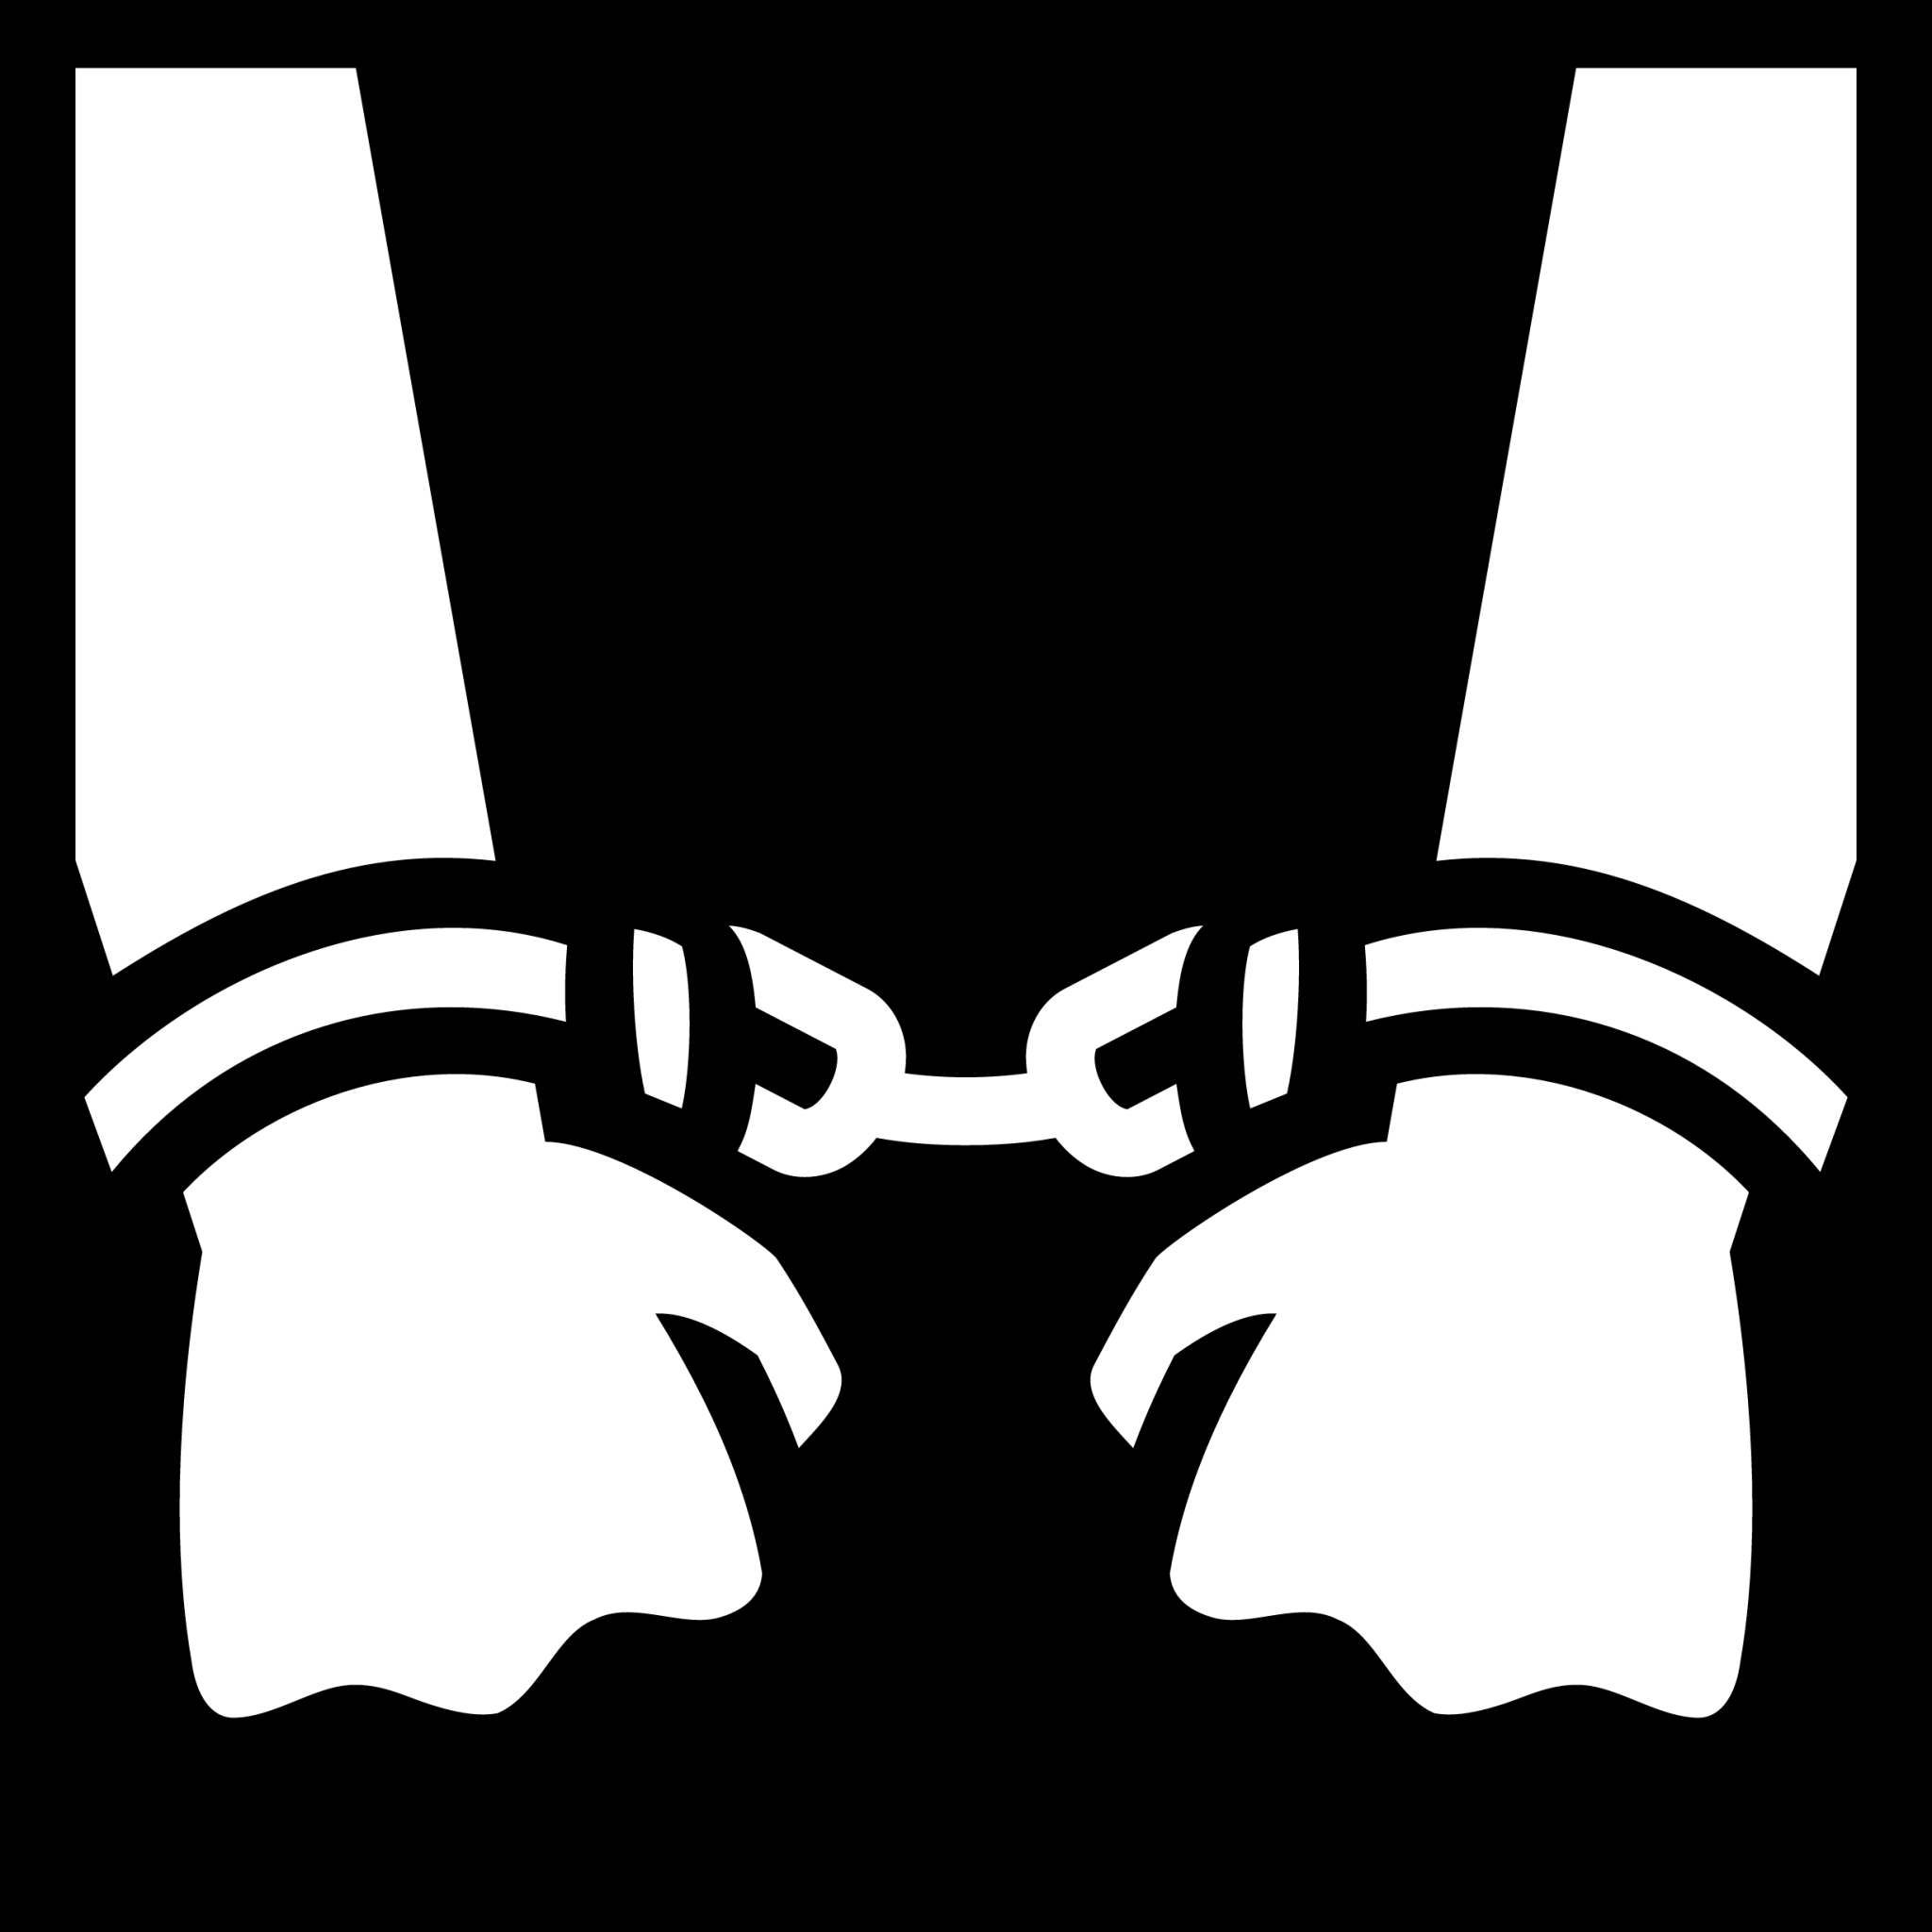 handcuffed icon